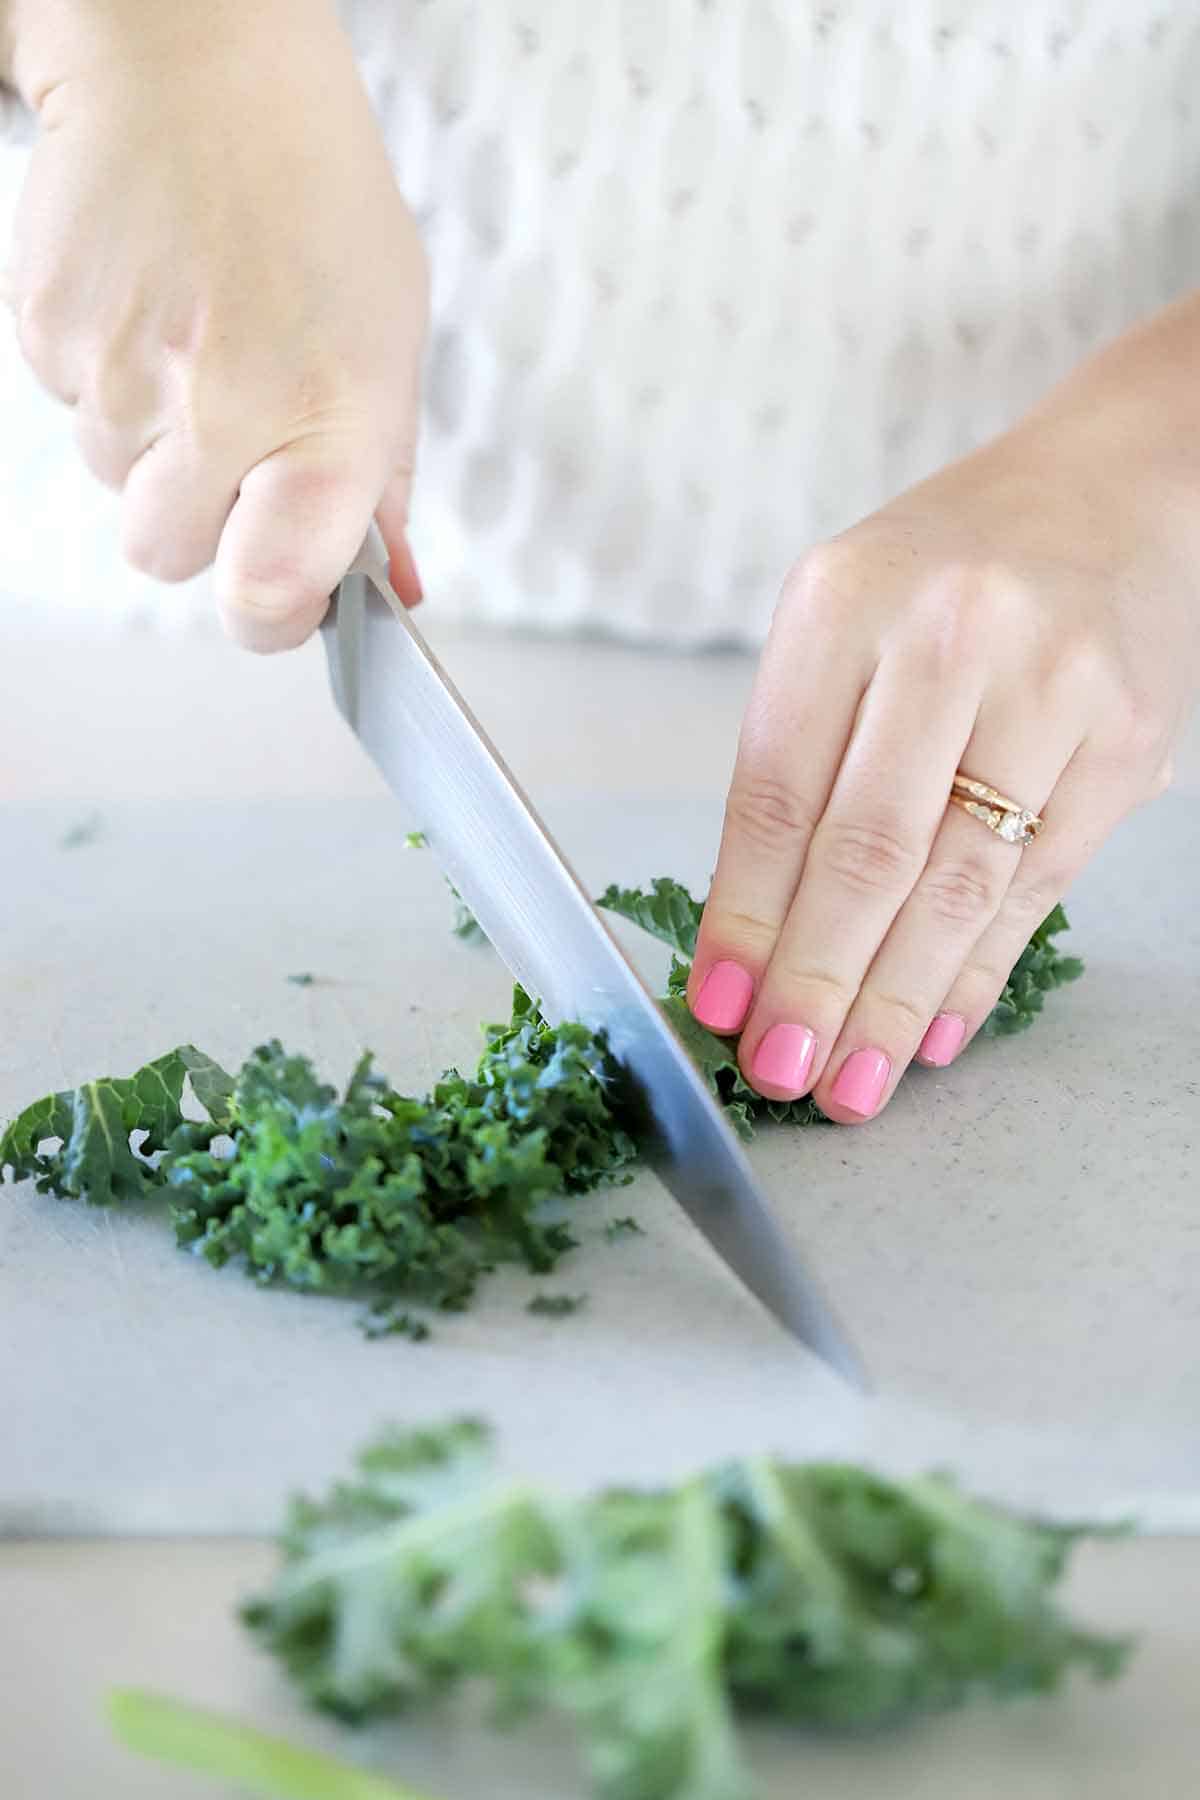 Chopping kale on a cutting board.